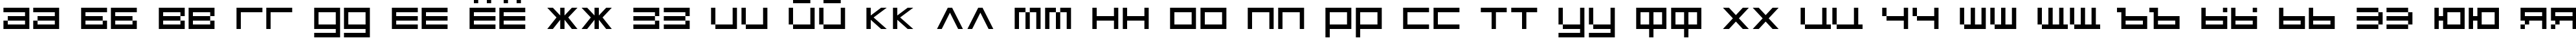 Пример написания русского алфавита шрифтом MicroTech